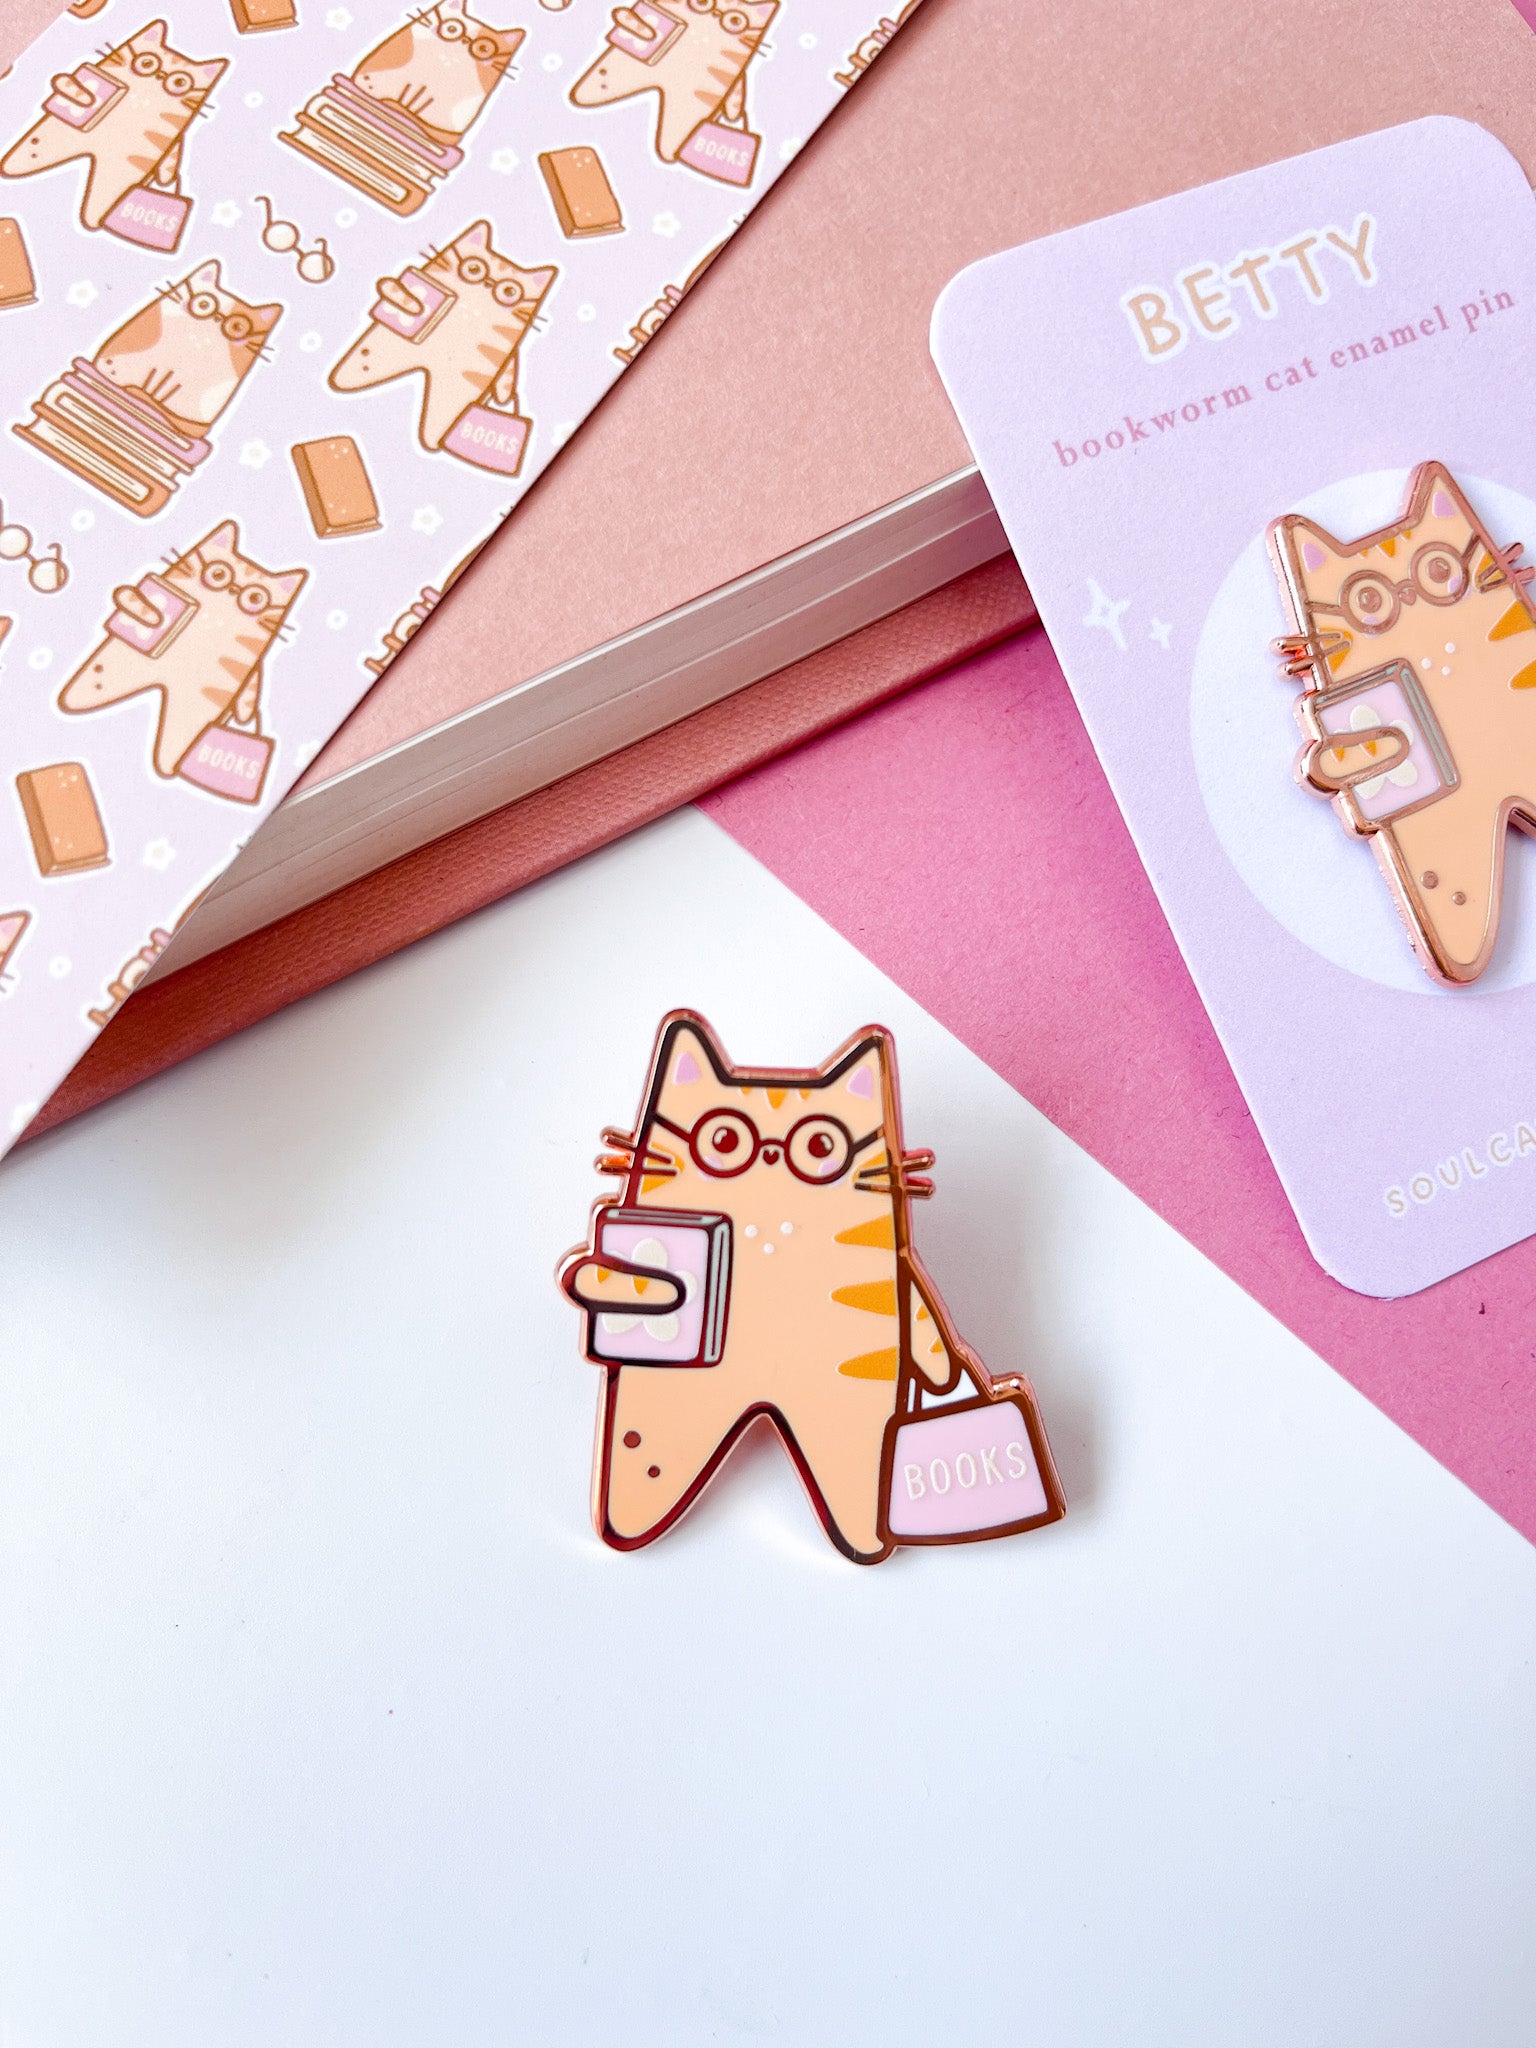 Betty - Bookworm Cat Enamel Pin – Soul Cat Studio